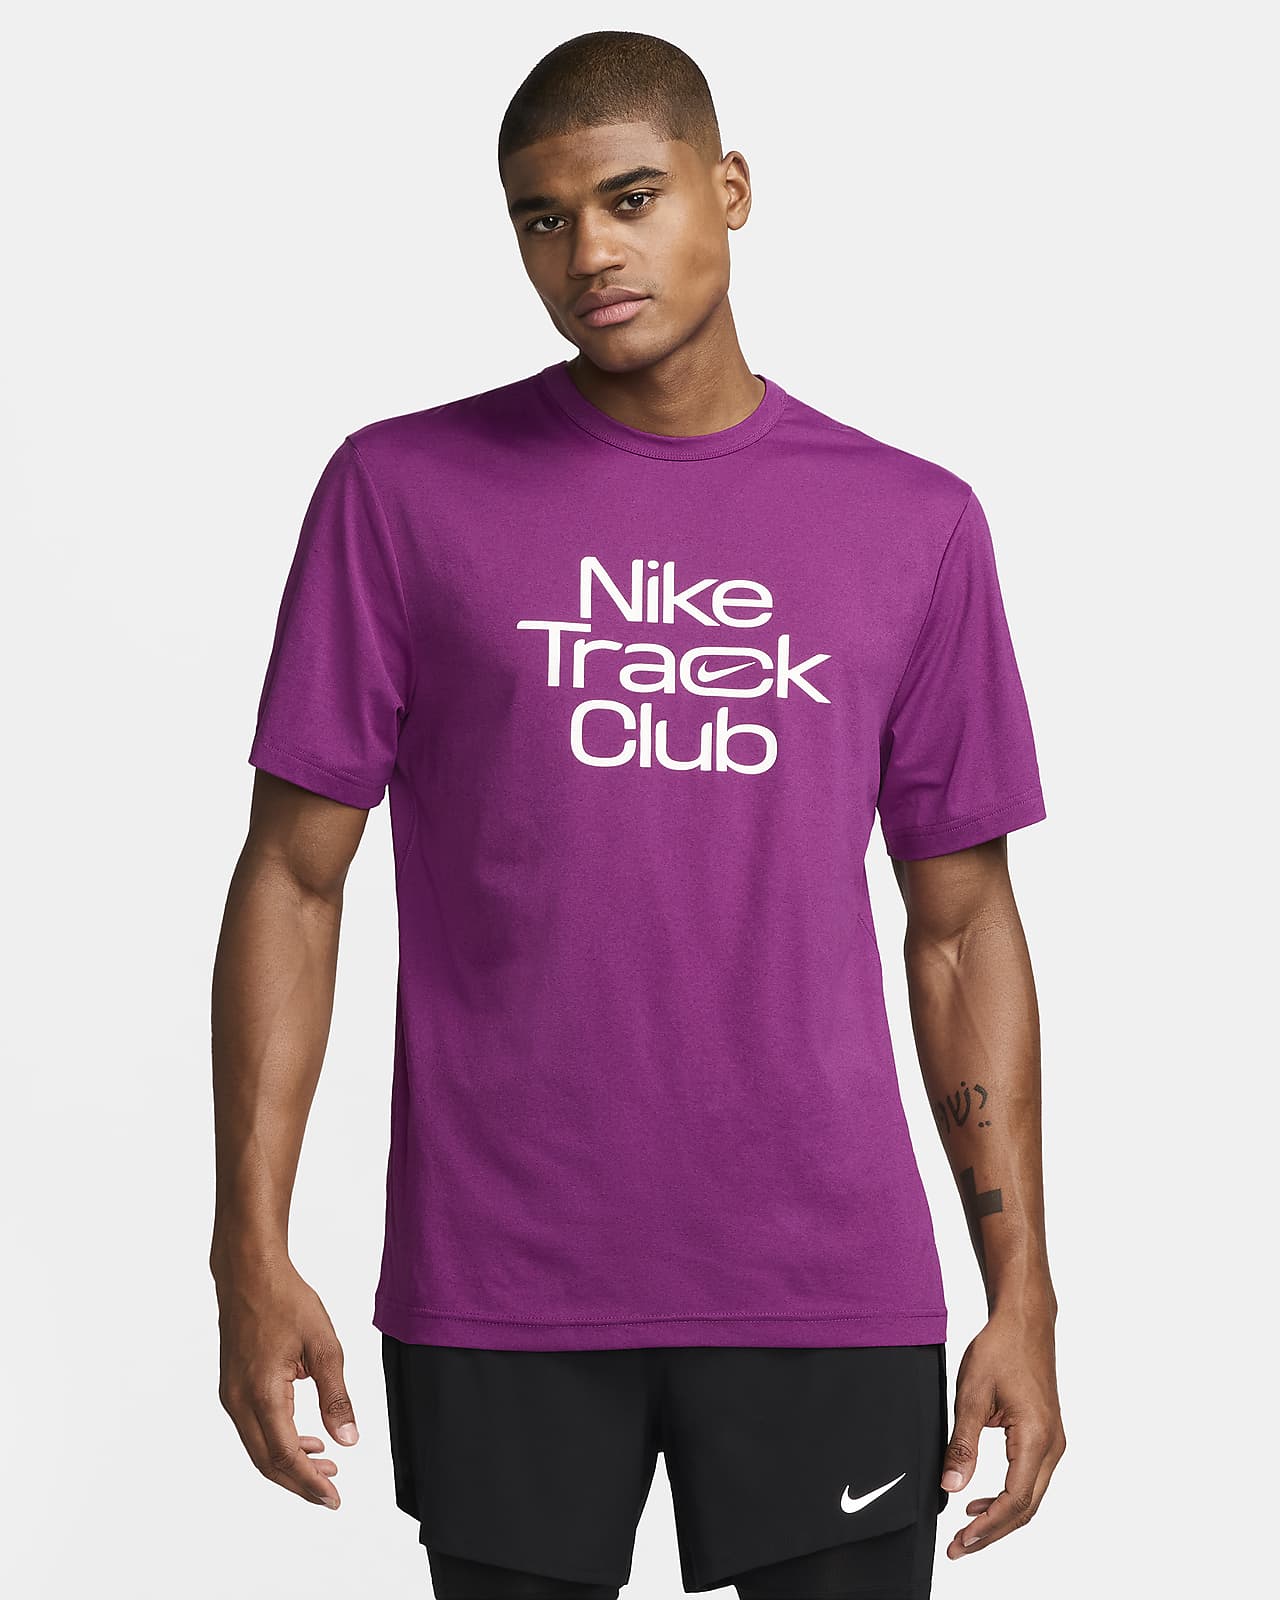 Nike Track Club Nike Dri-FIT Kurzarm-Laufoberteil für Herren